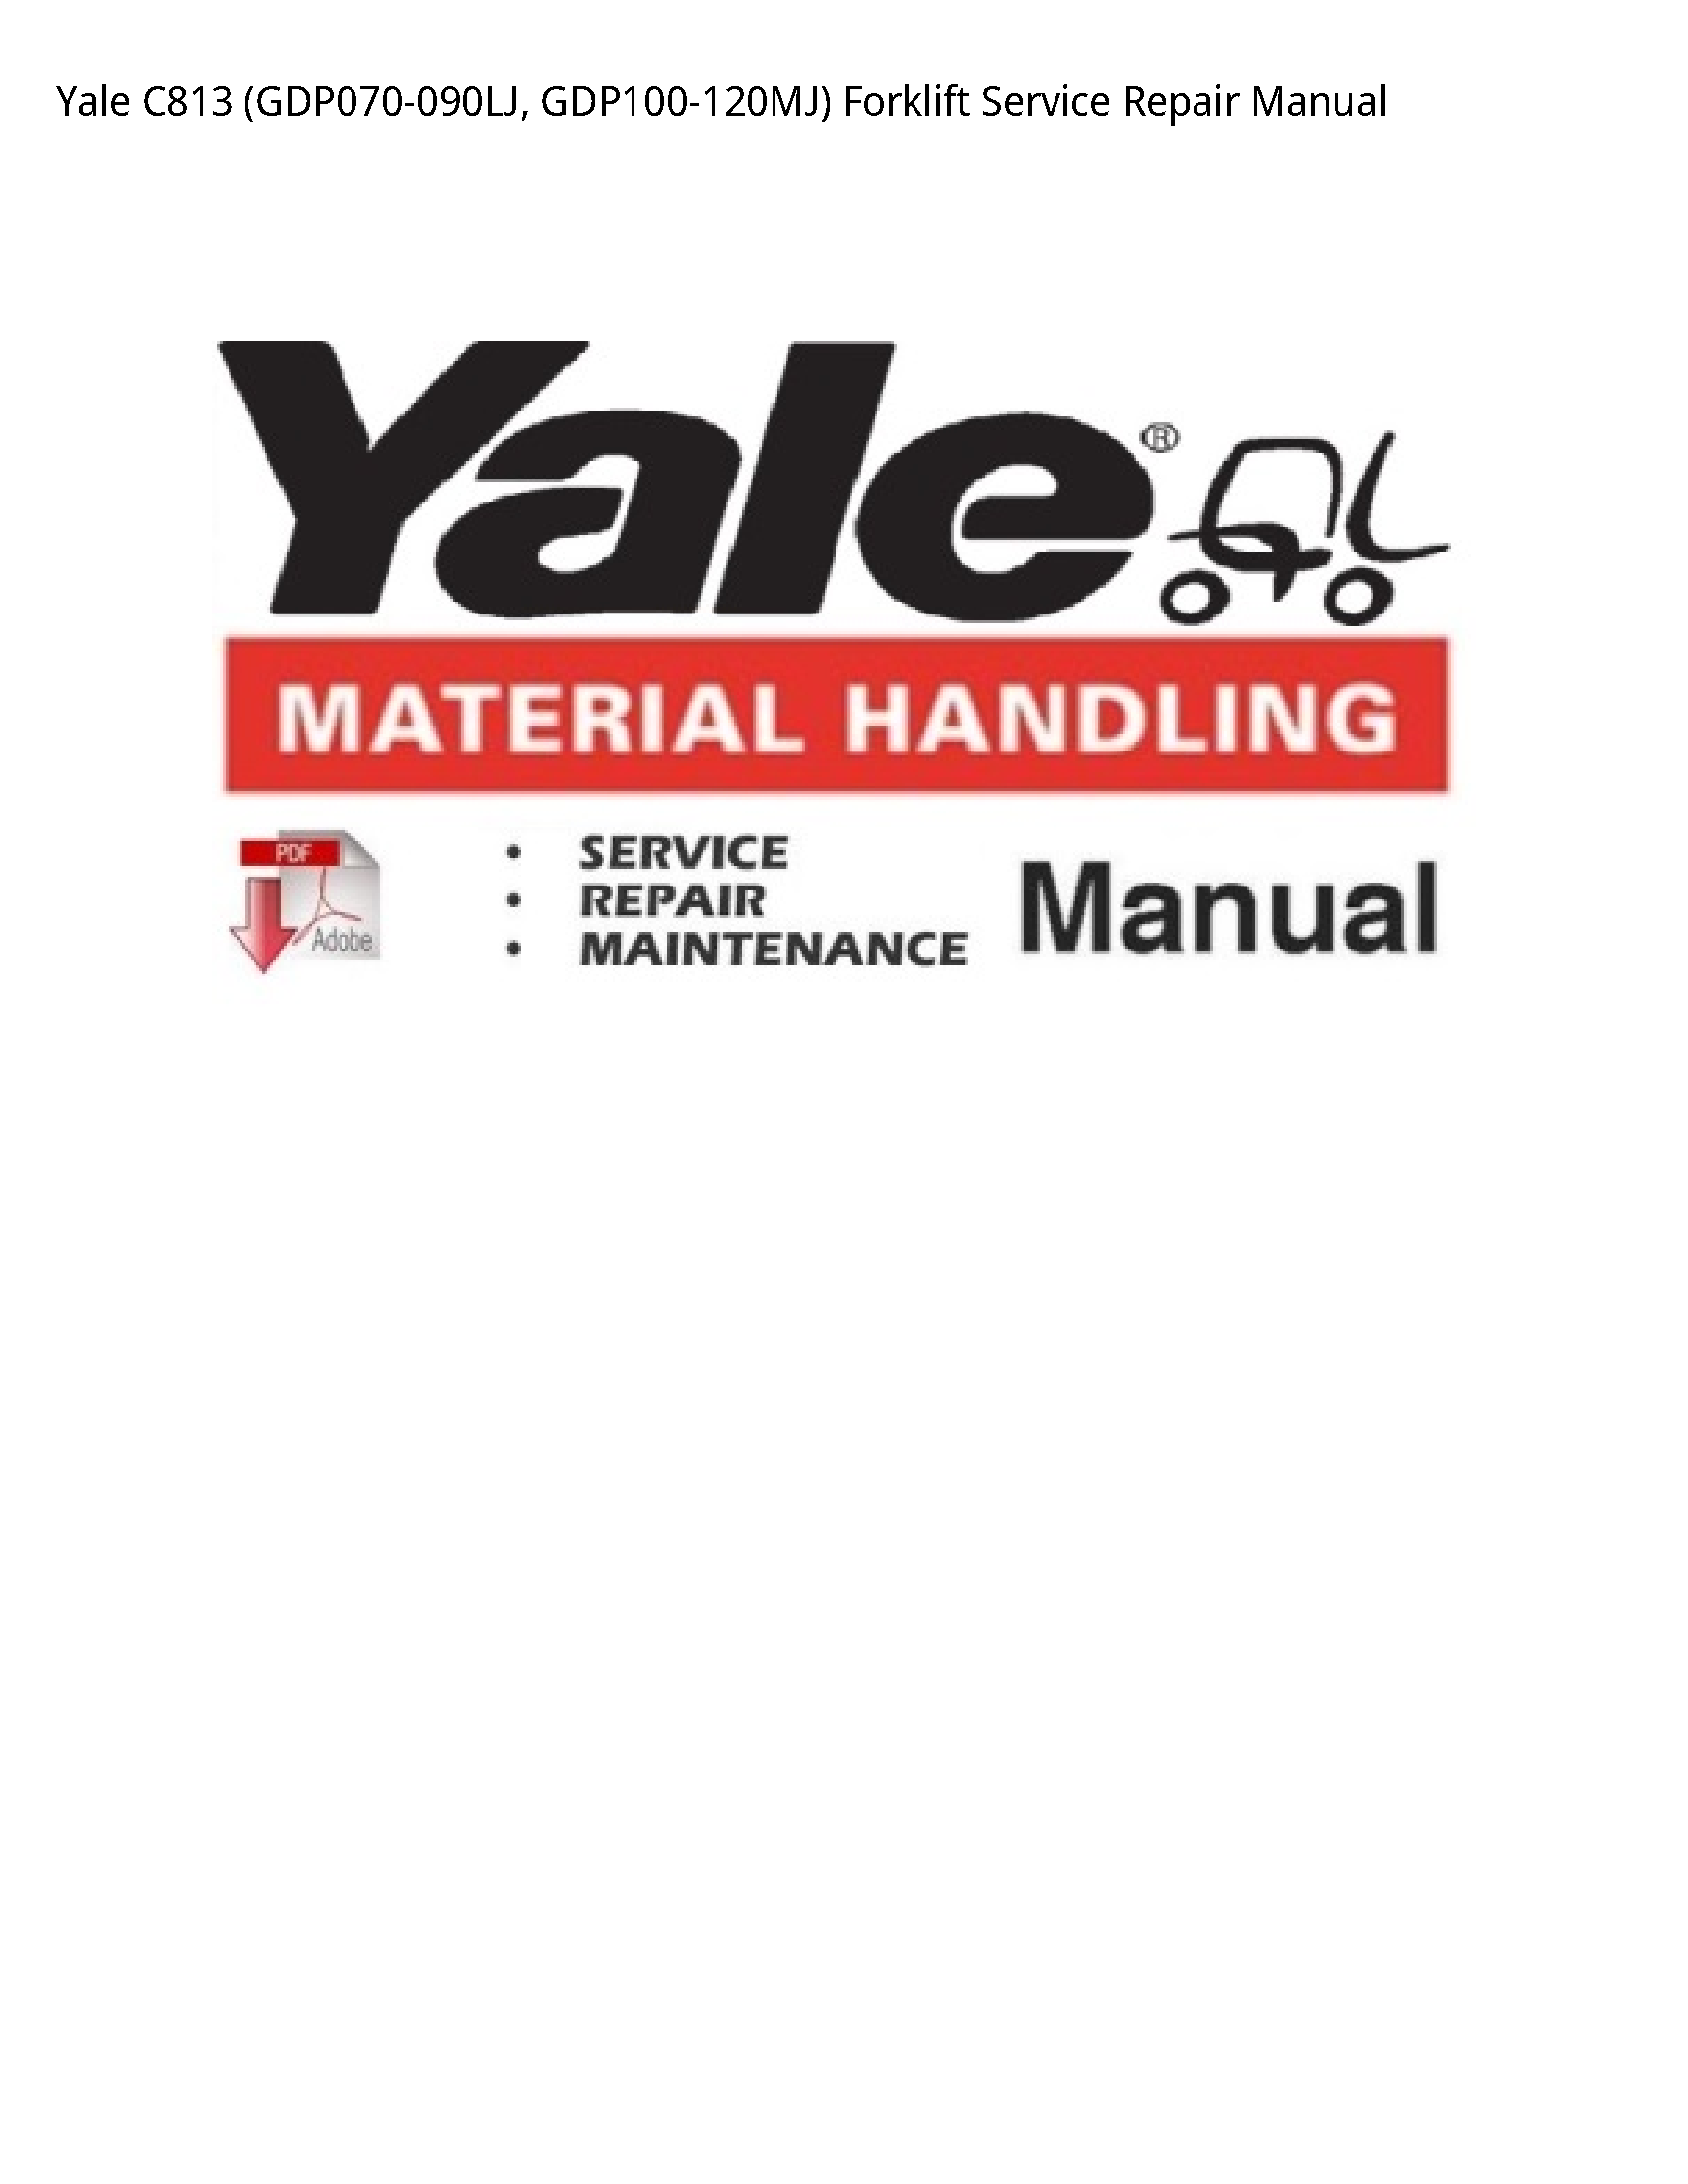 Yale C813 Forklift manual